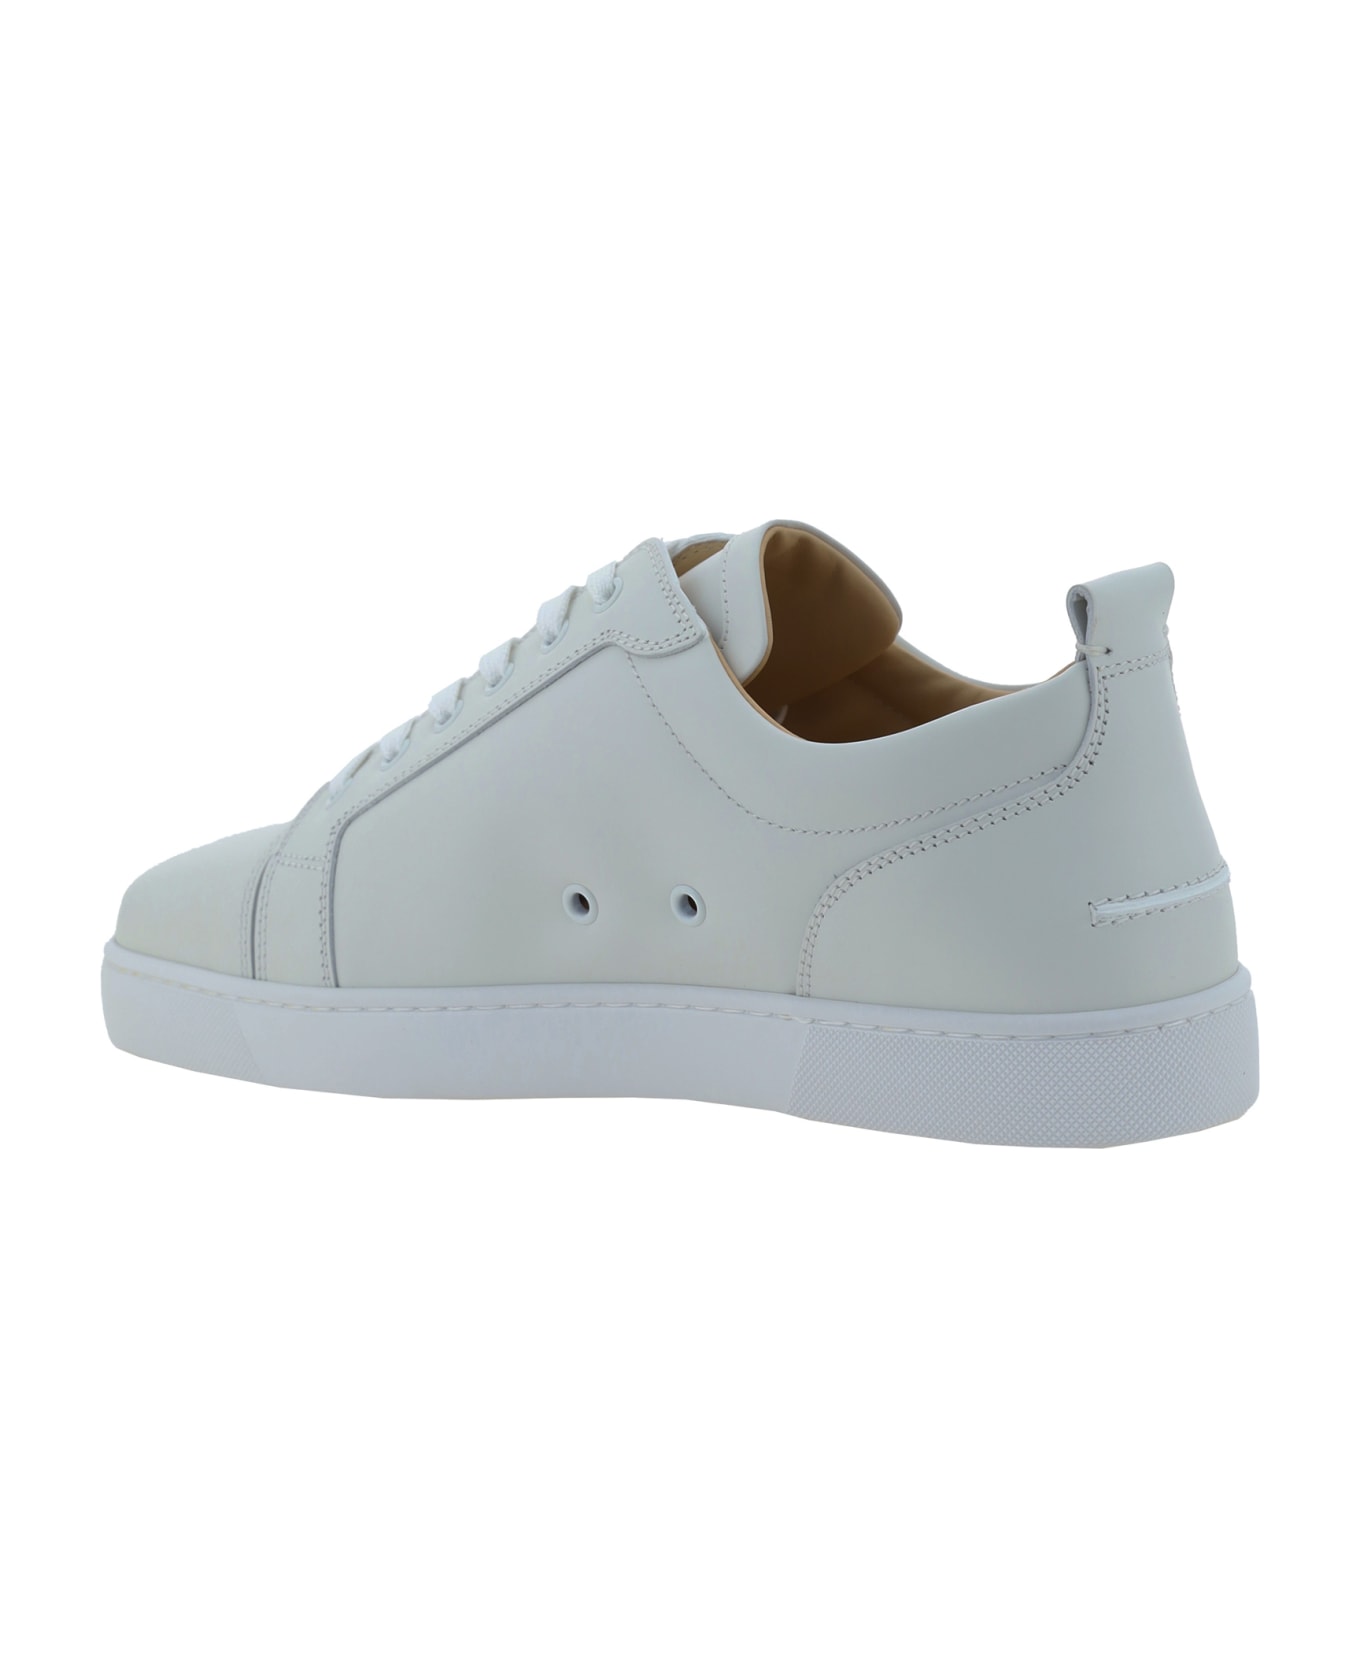 Christian Louboutin Louis Junior Flat Sneakers - White スニーカー